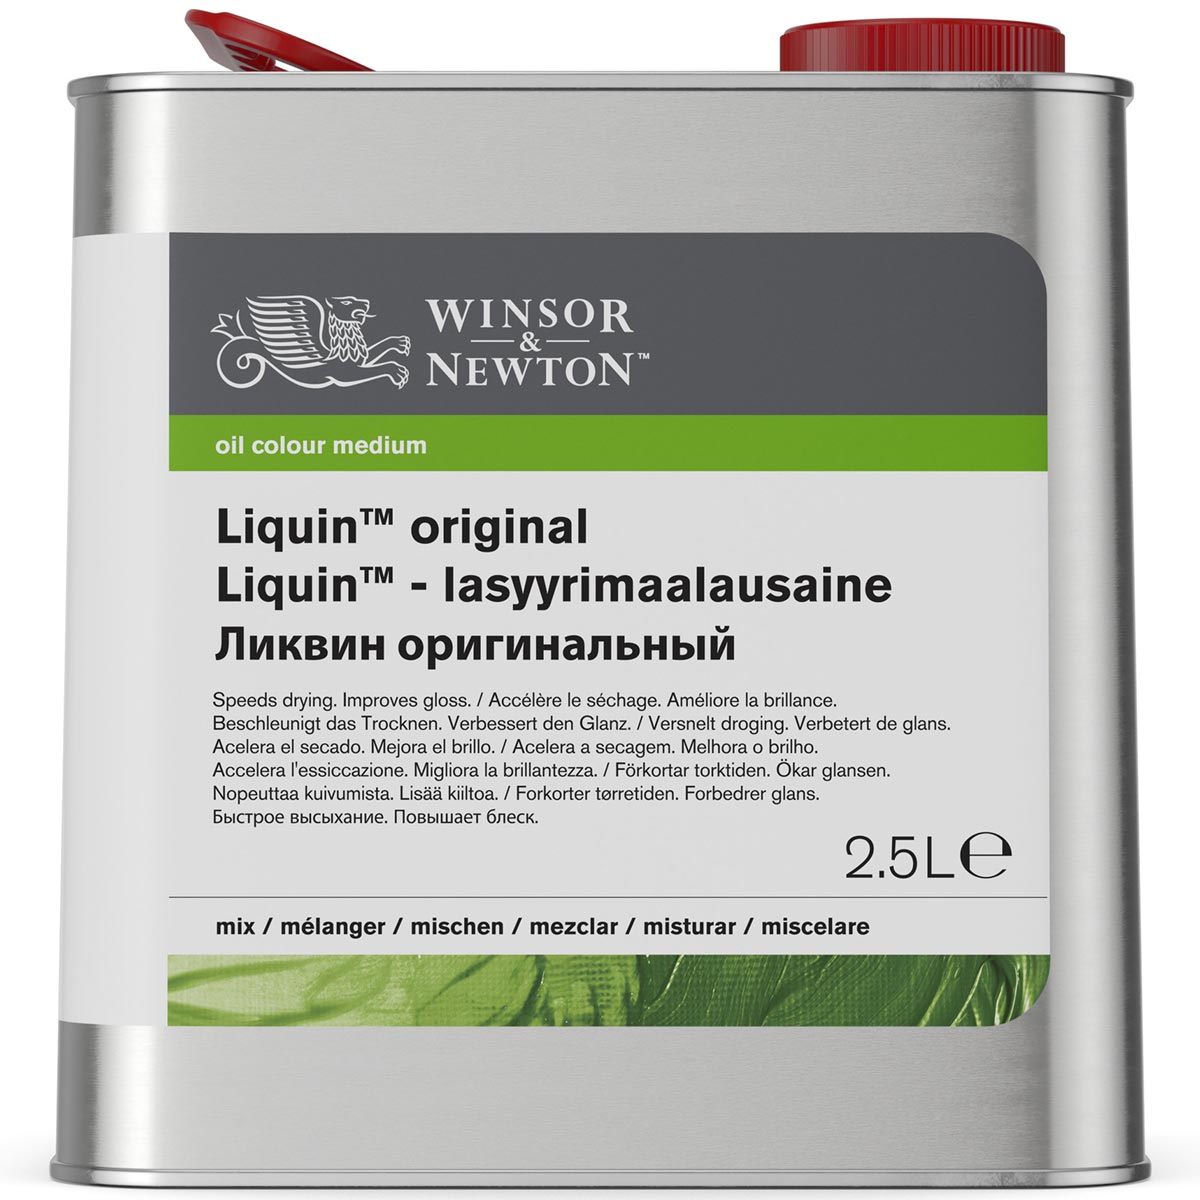 Winsor and Newton - Liquin Original - 2.5 Litre